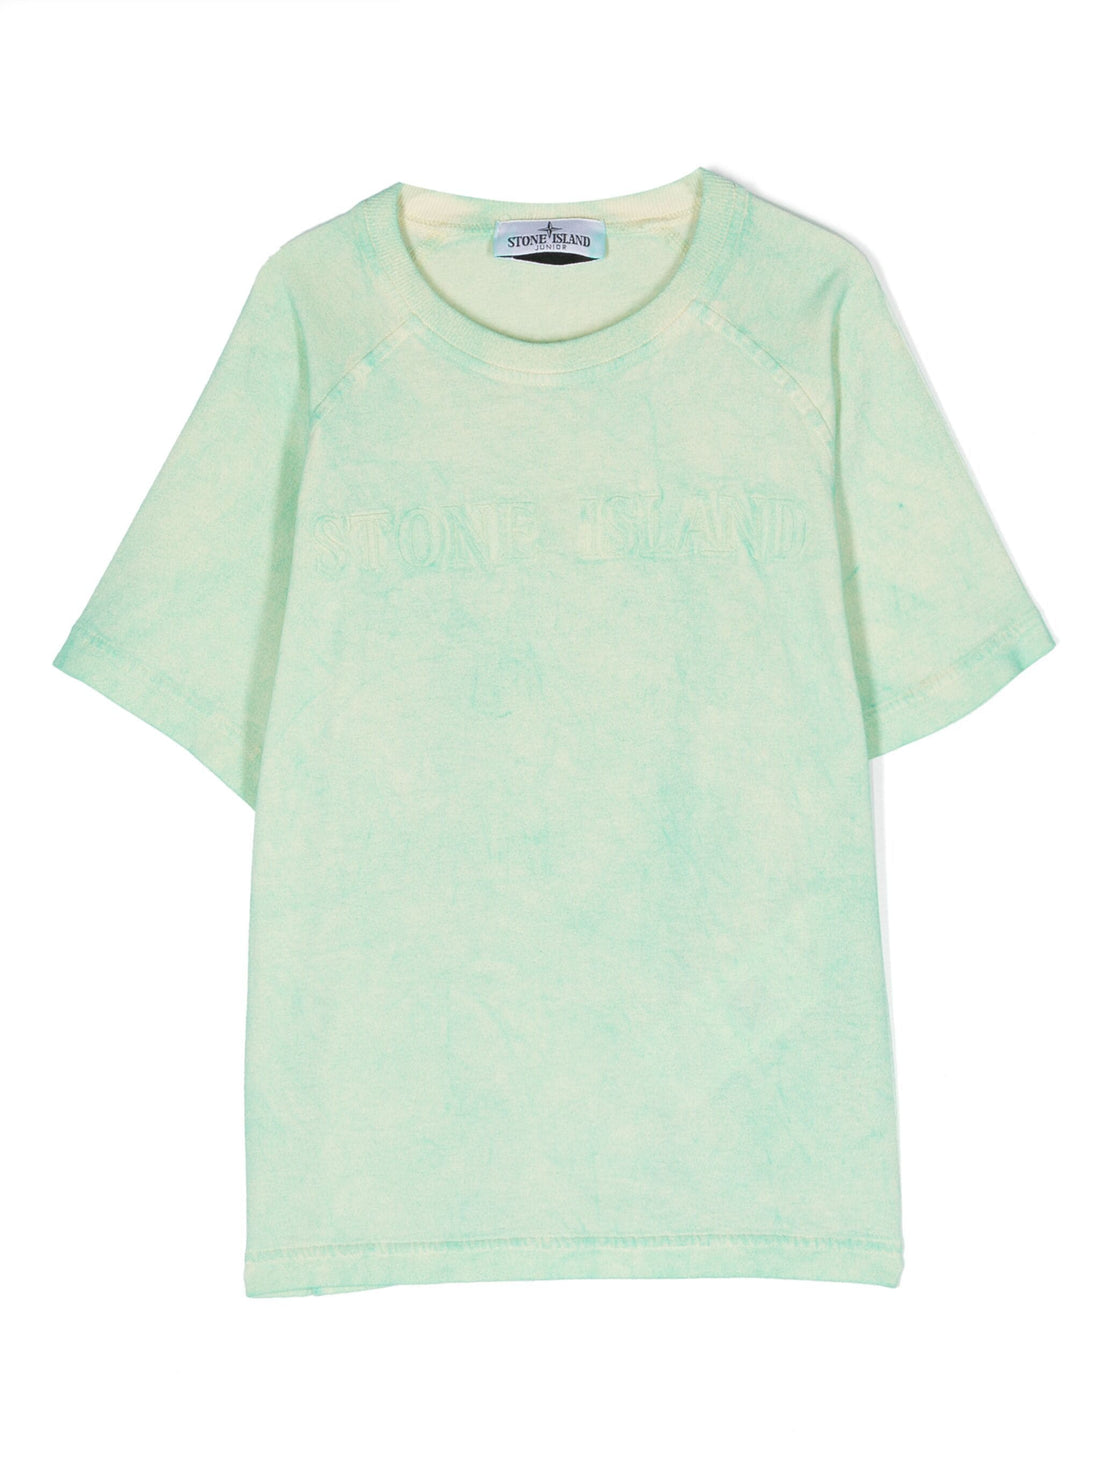 STONE ISLAND KIDS Logo Embroidered Cotton T-Shirt Green - MAISONDEFASHION.COM